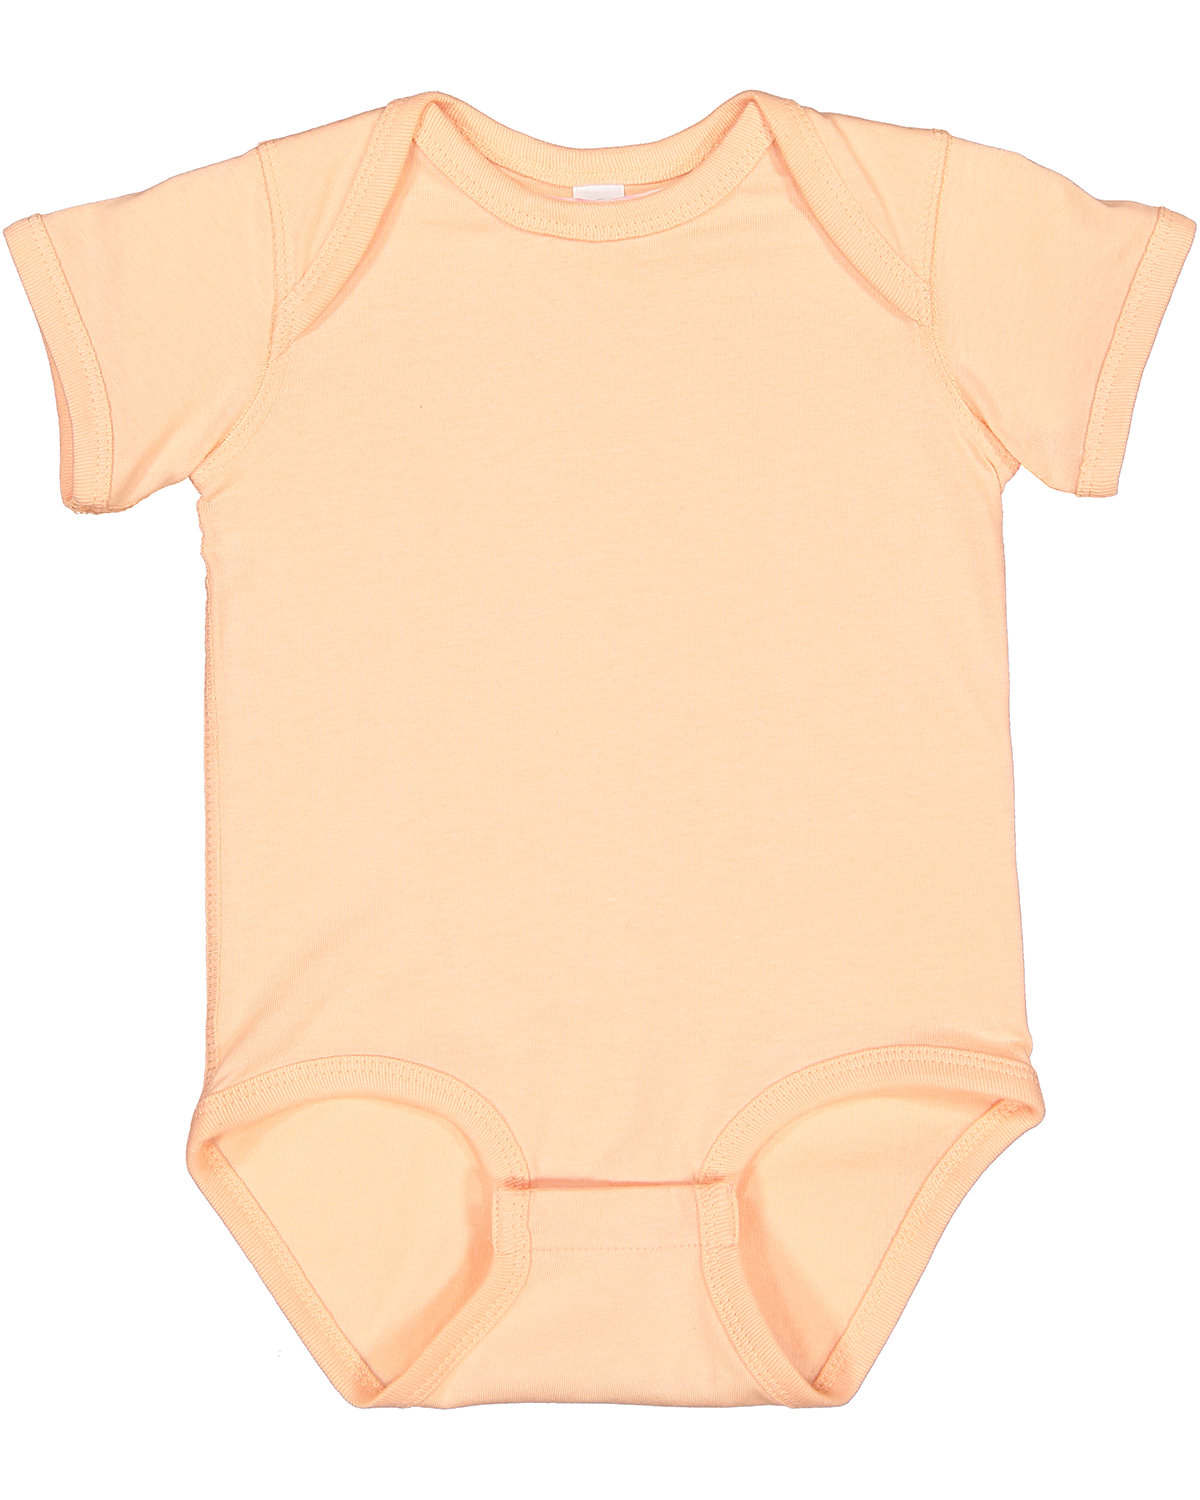 Rabbit Skins 4424 Infant Fine Jersey Bodysuit - Butter - 18M